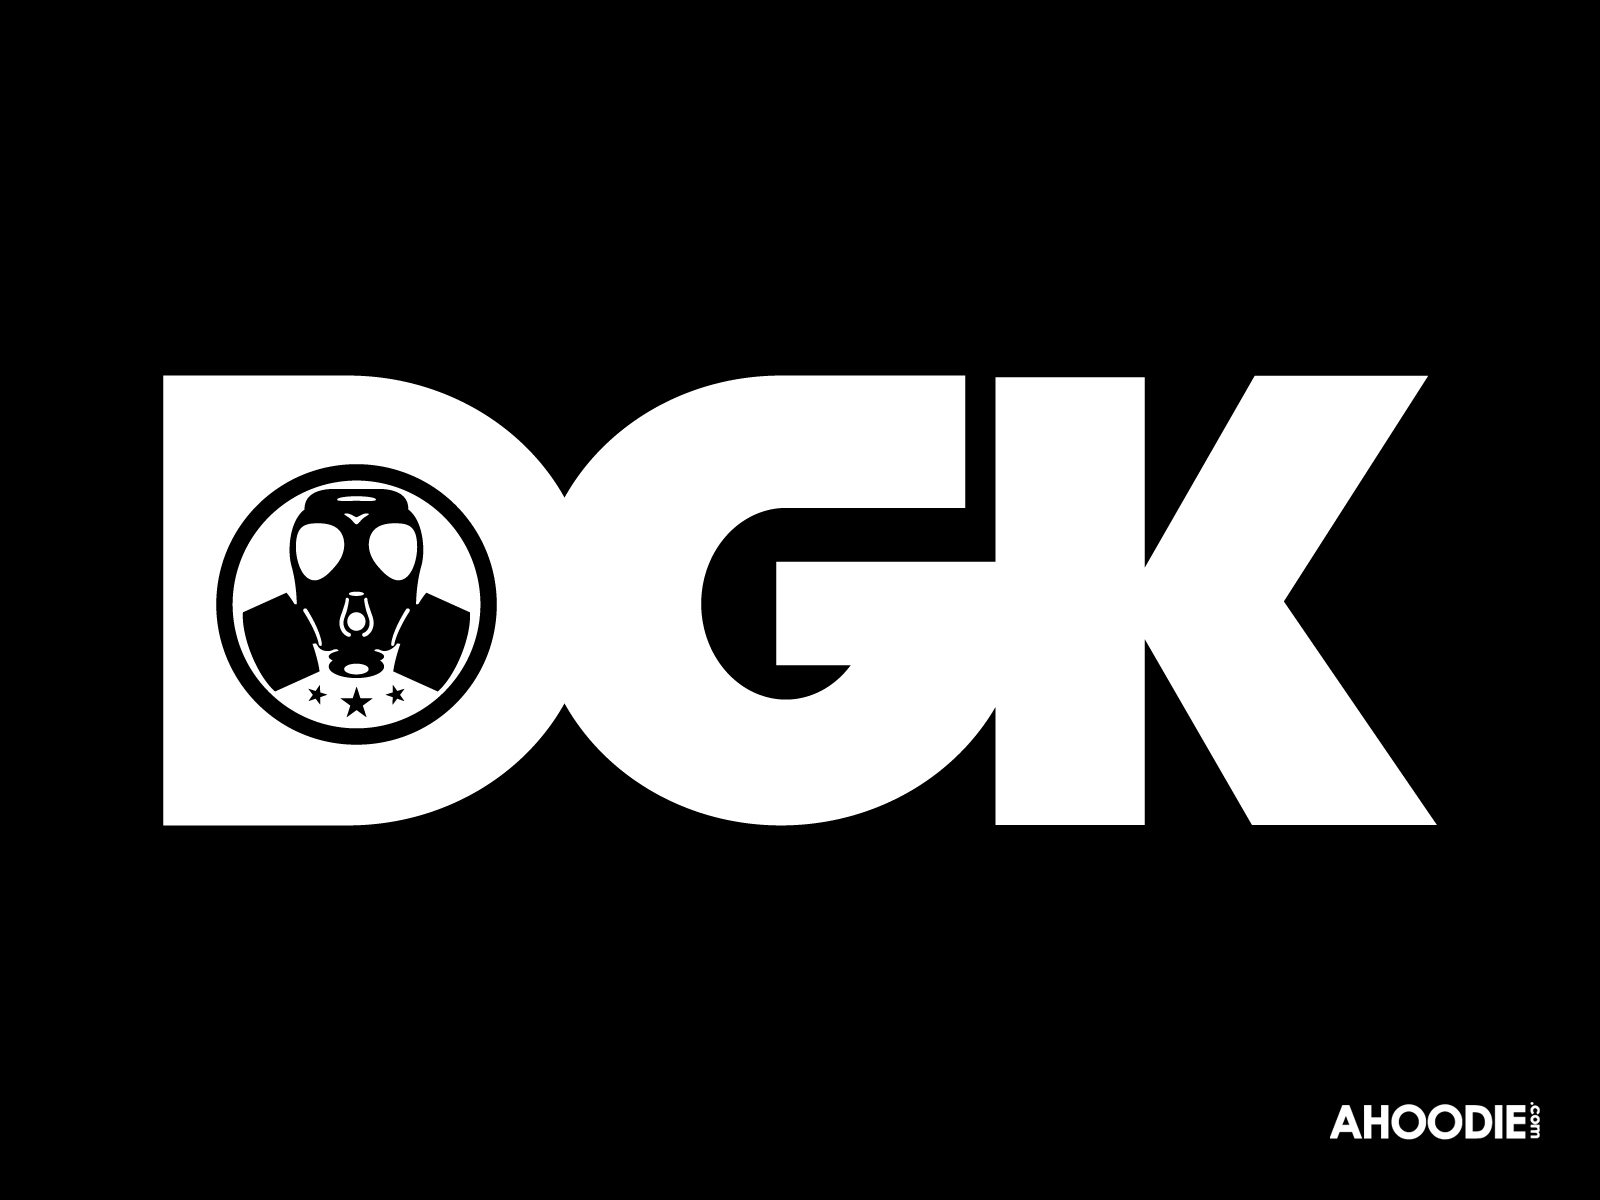 dgk logo re-creation